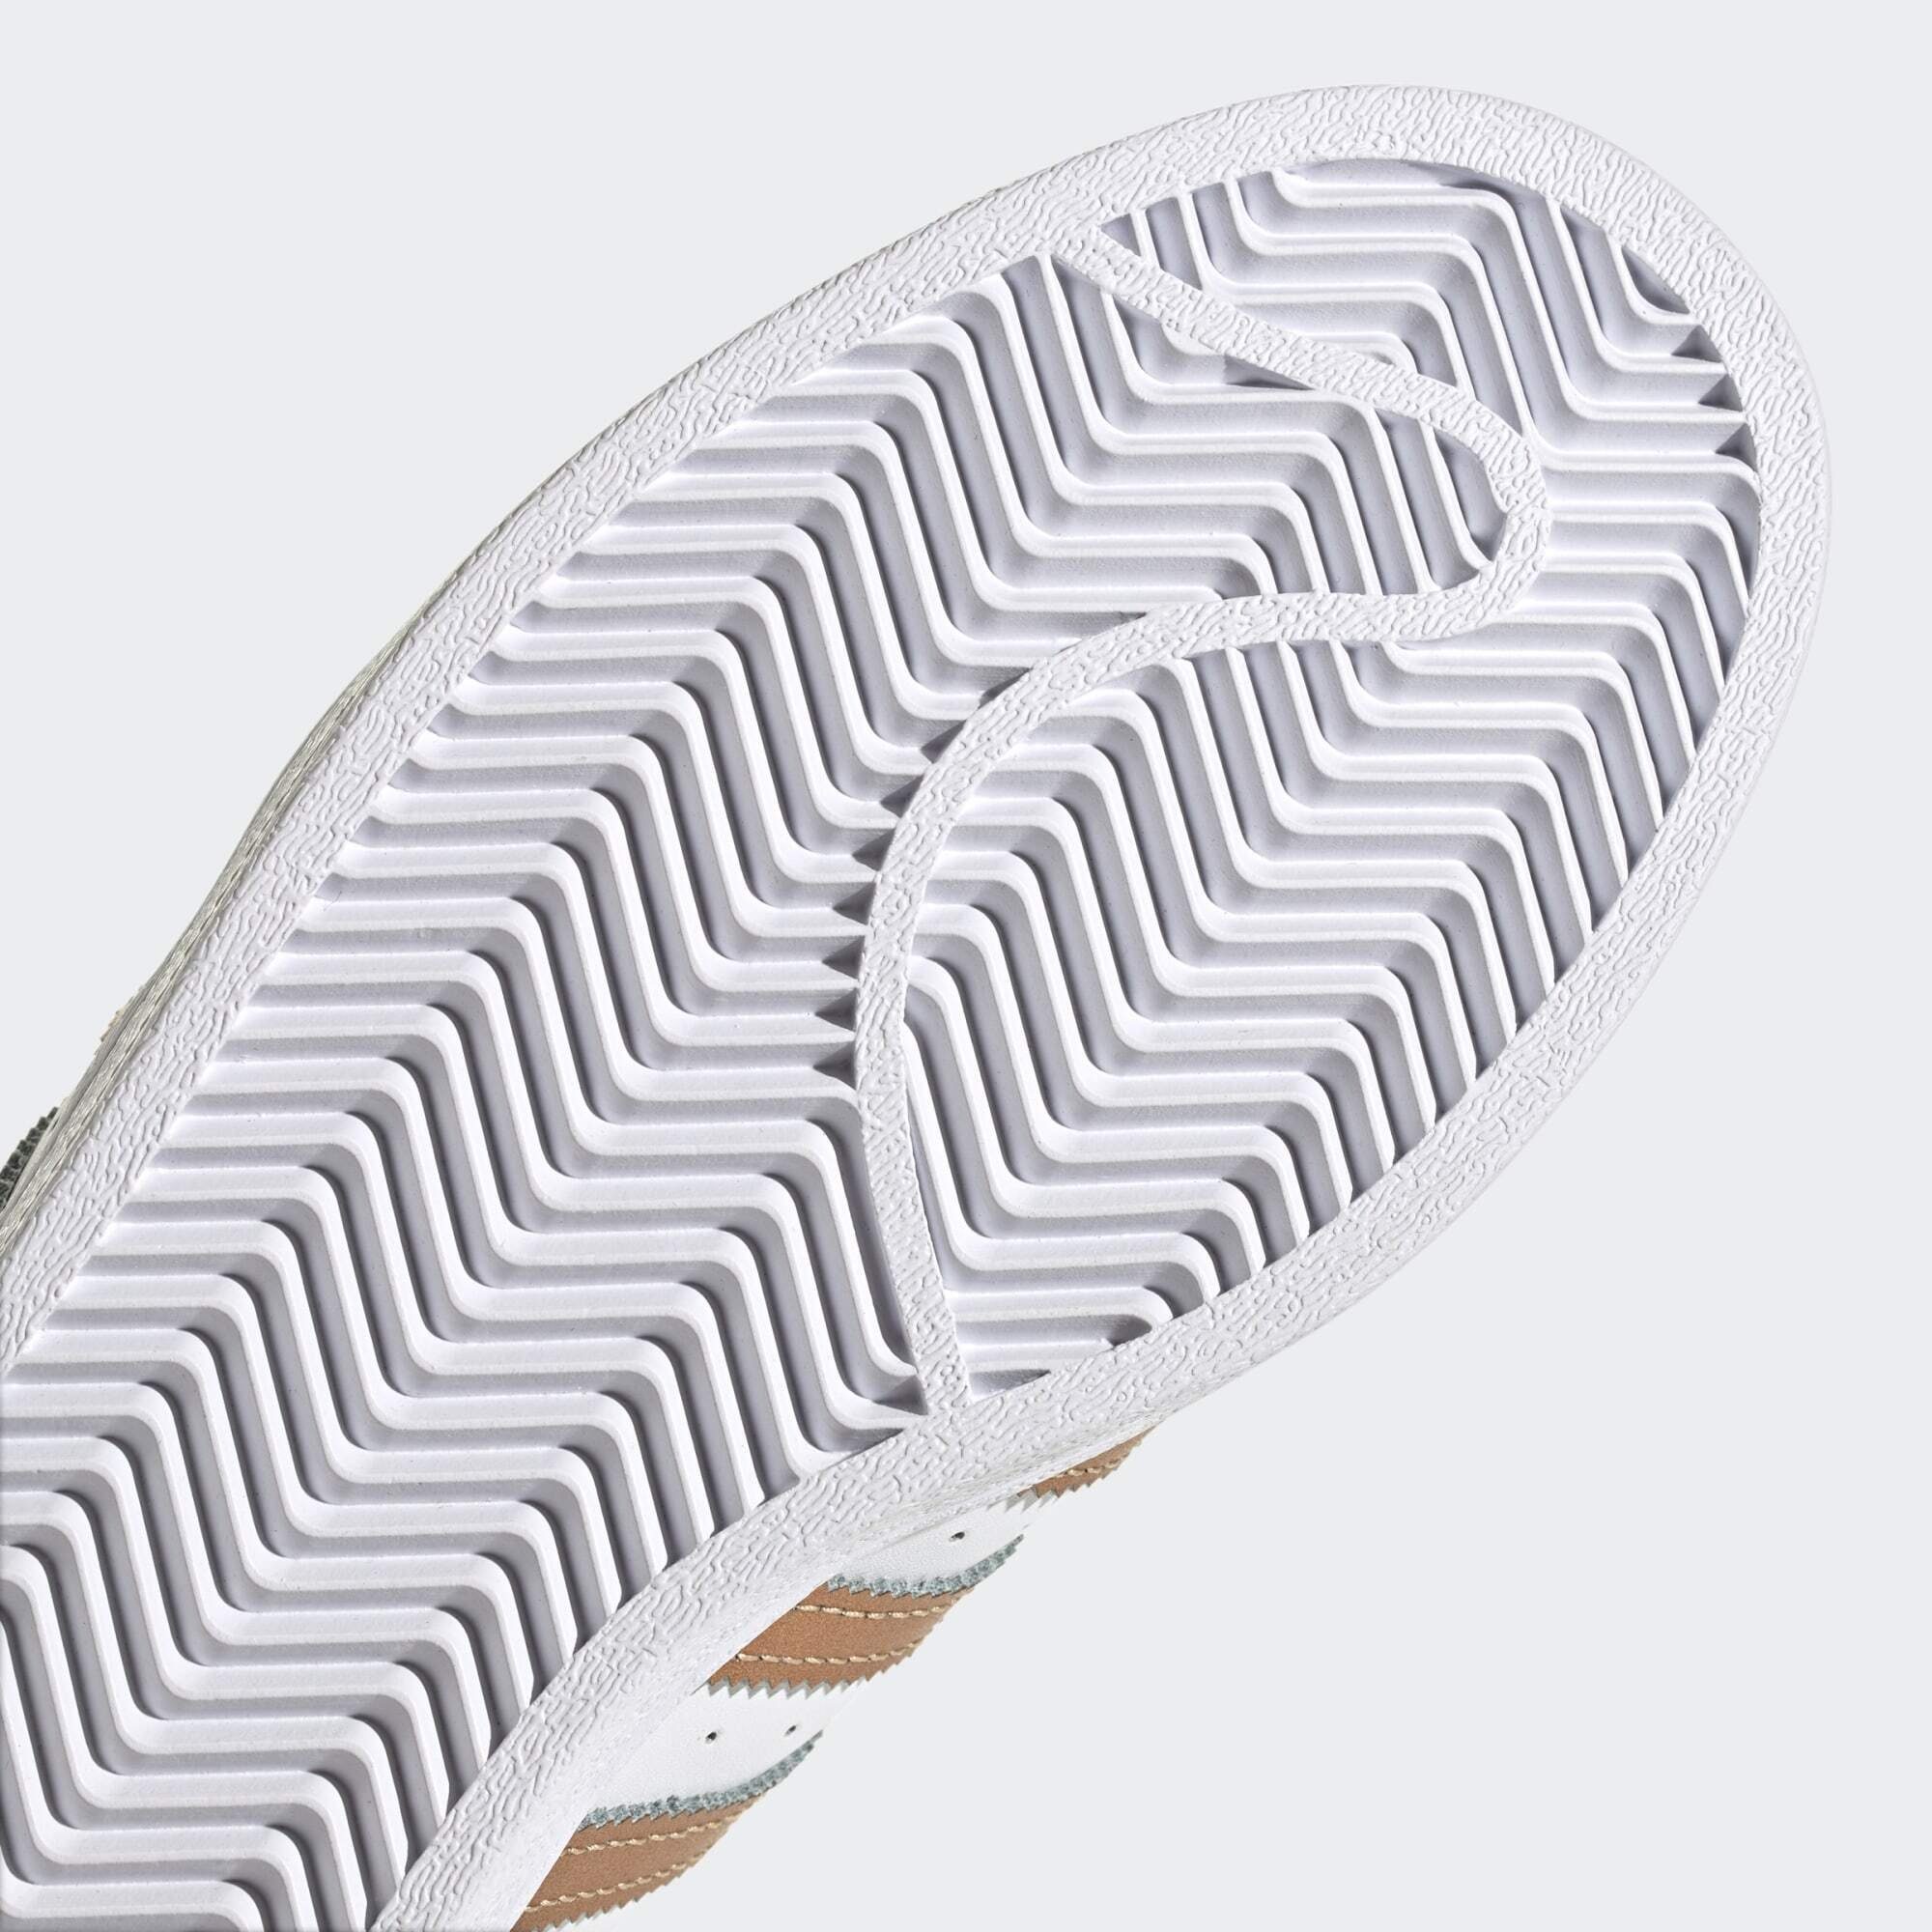 adidas / Black Originals Core Copper / Sneaker Cloud SUPERSTAR SCHUH White Metallic